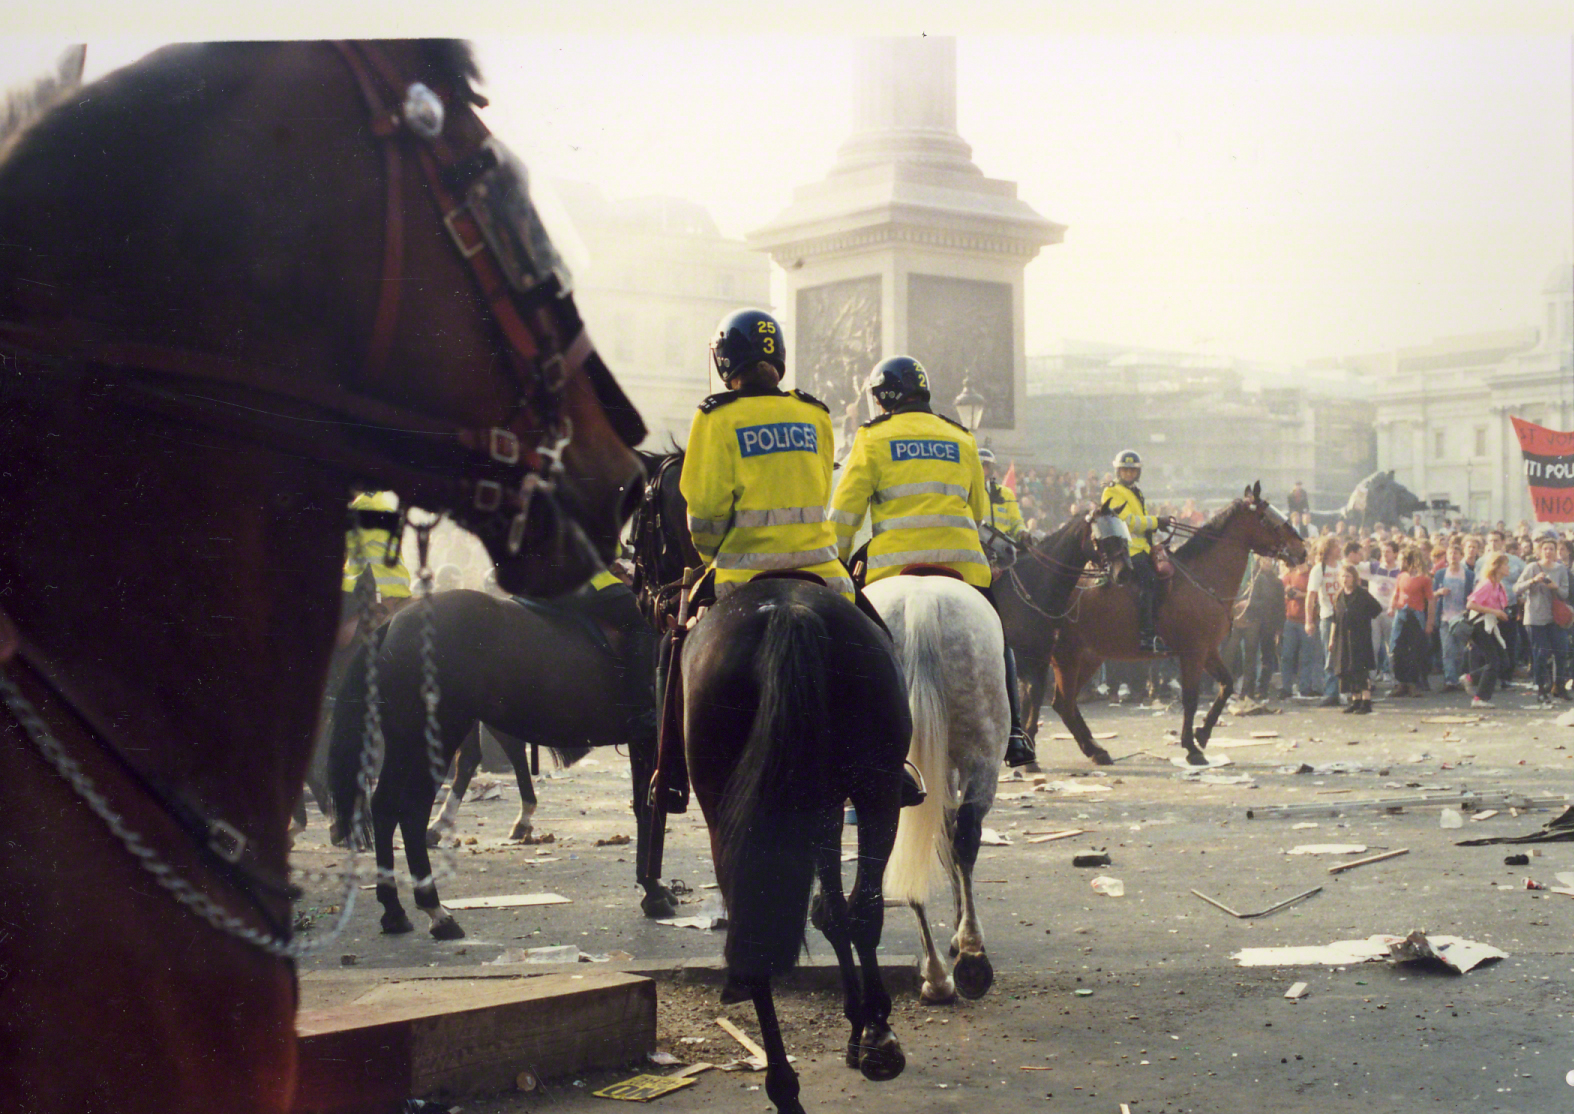 Poll Tax Riot at Trafalgar Square, 31st March 1990